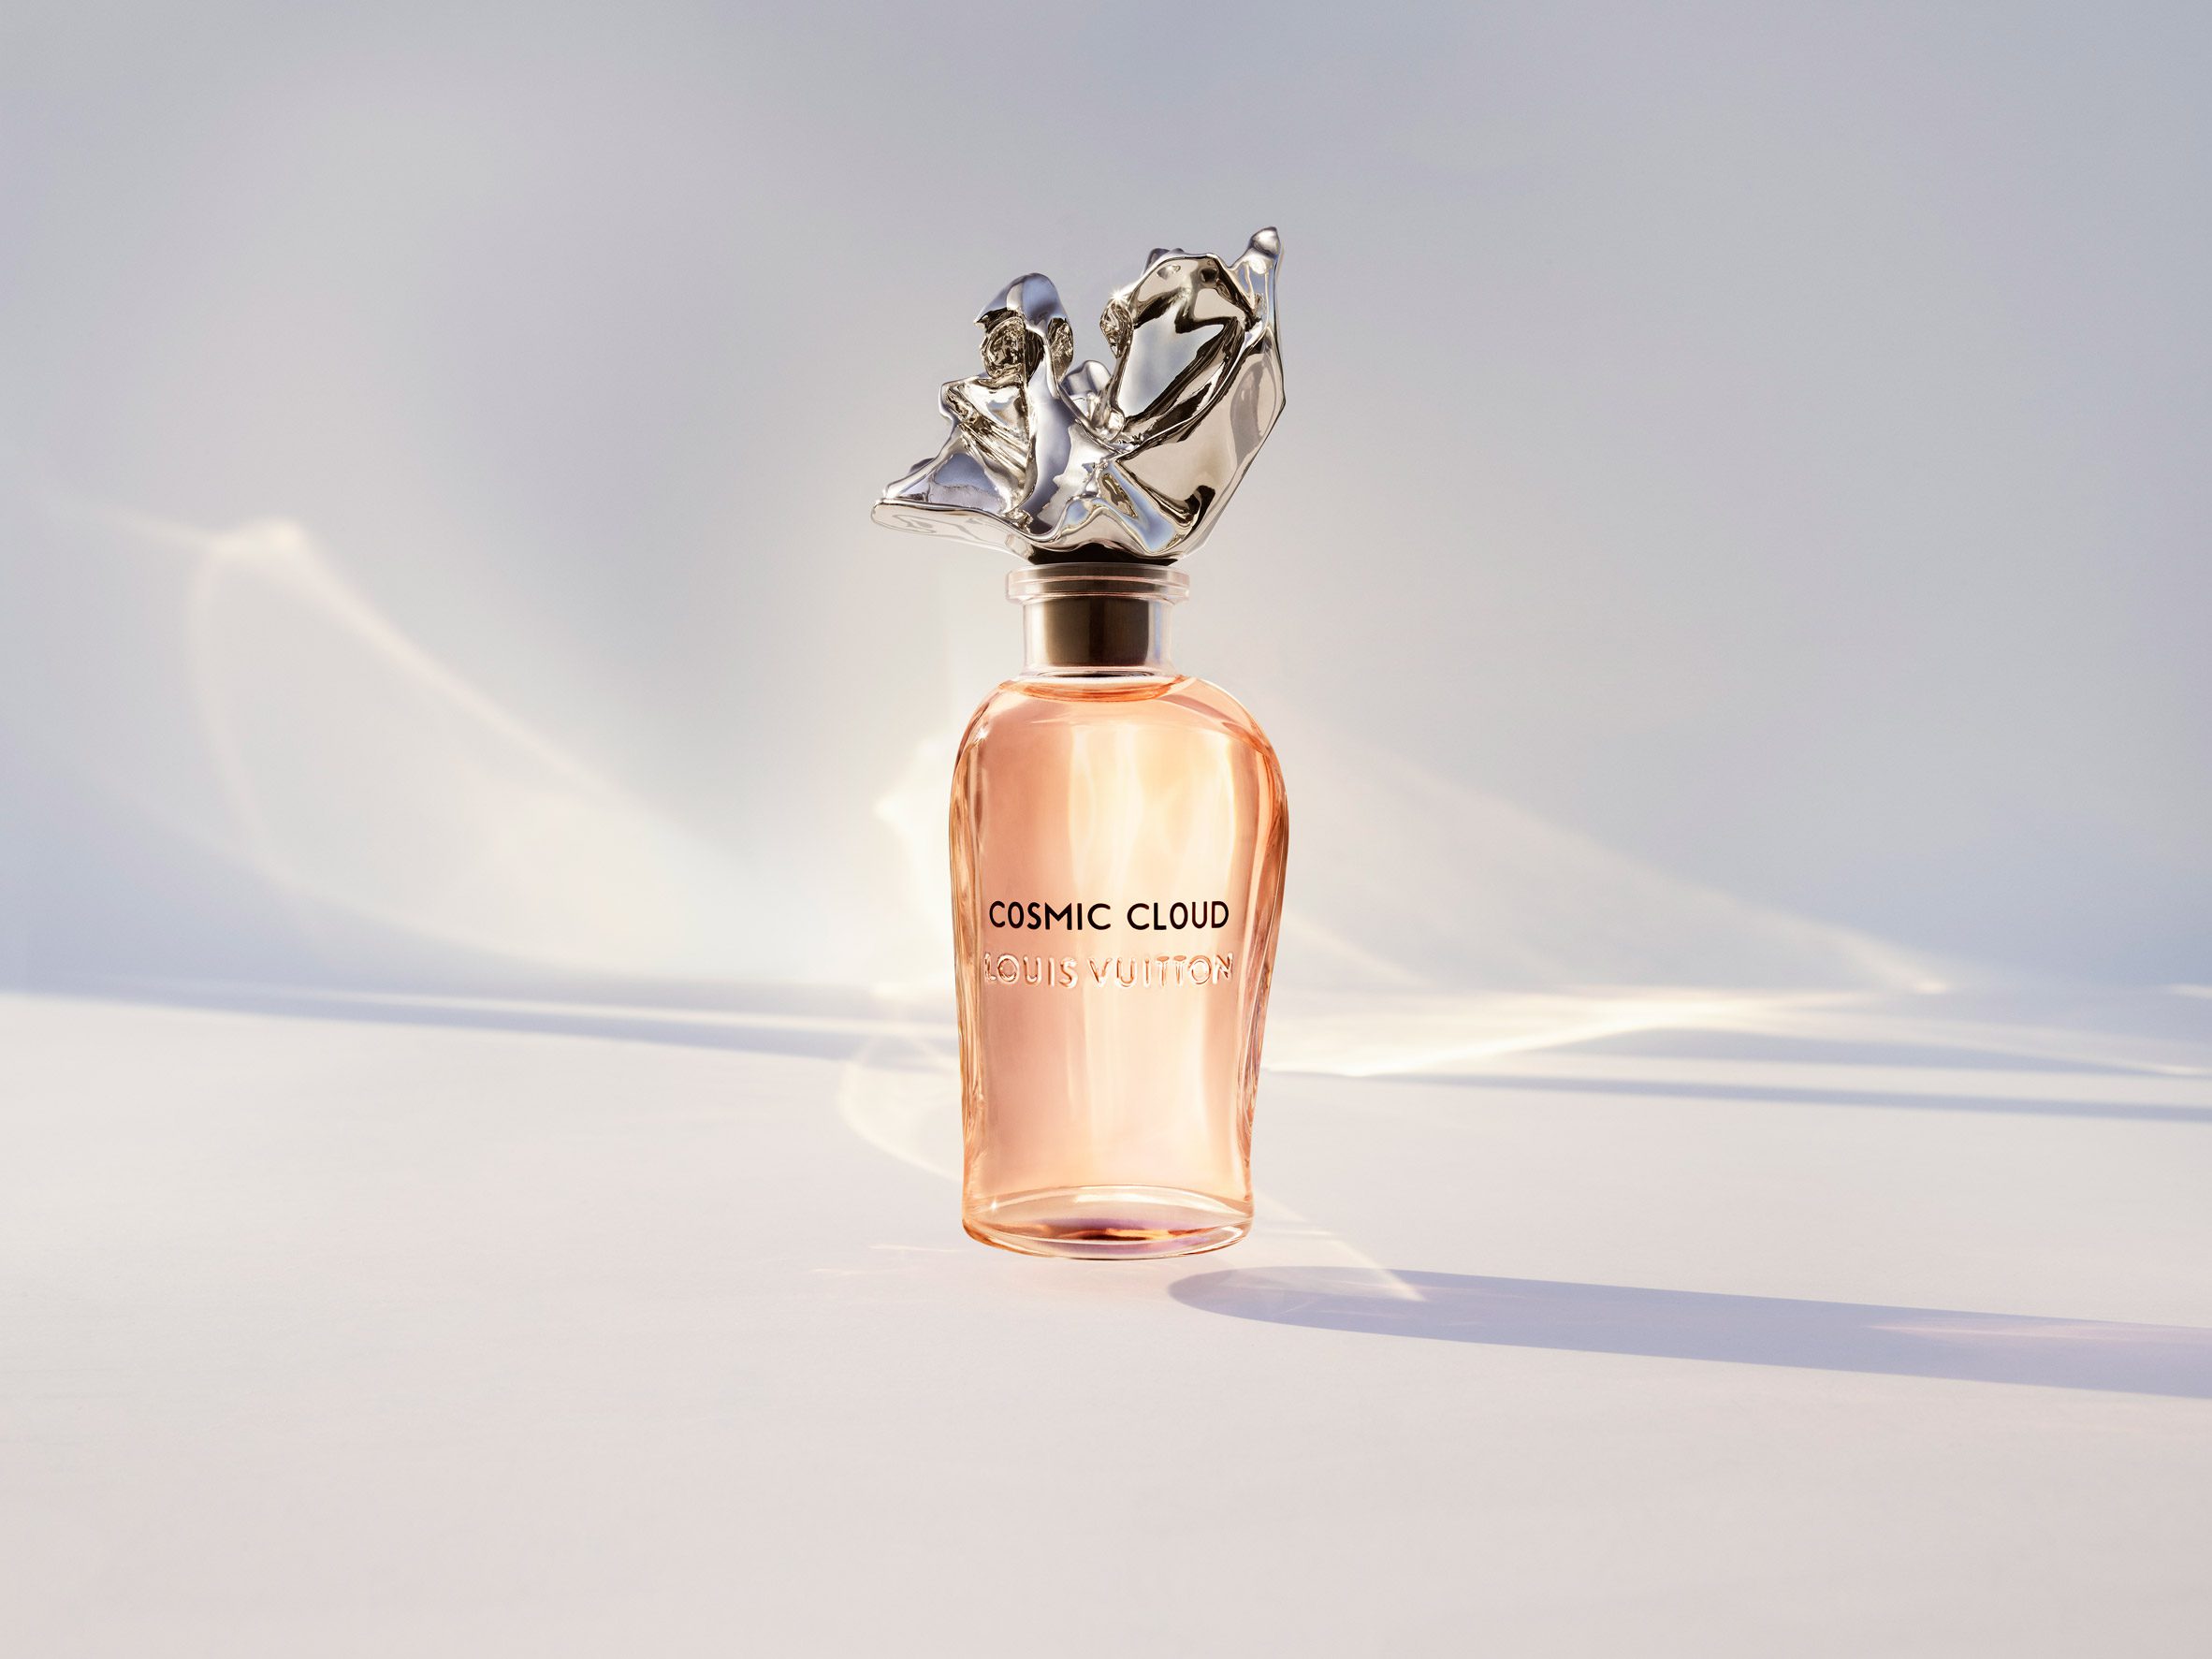 Frank Gehry tops Louis Vuitton perfume bottle with aluminium flower